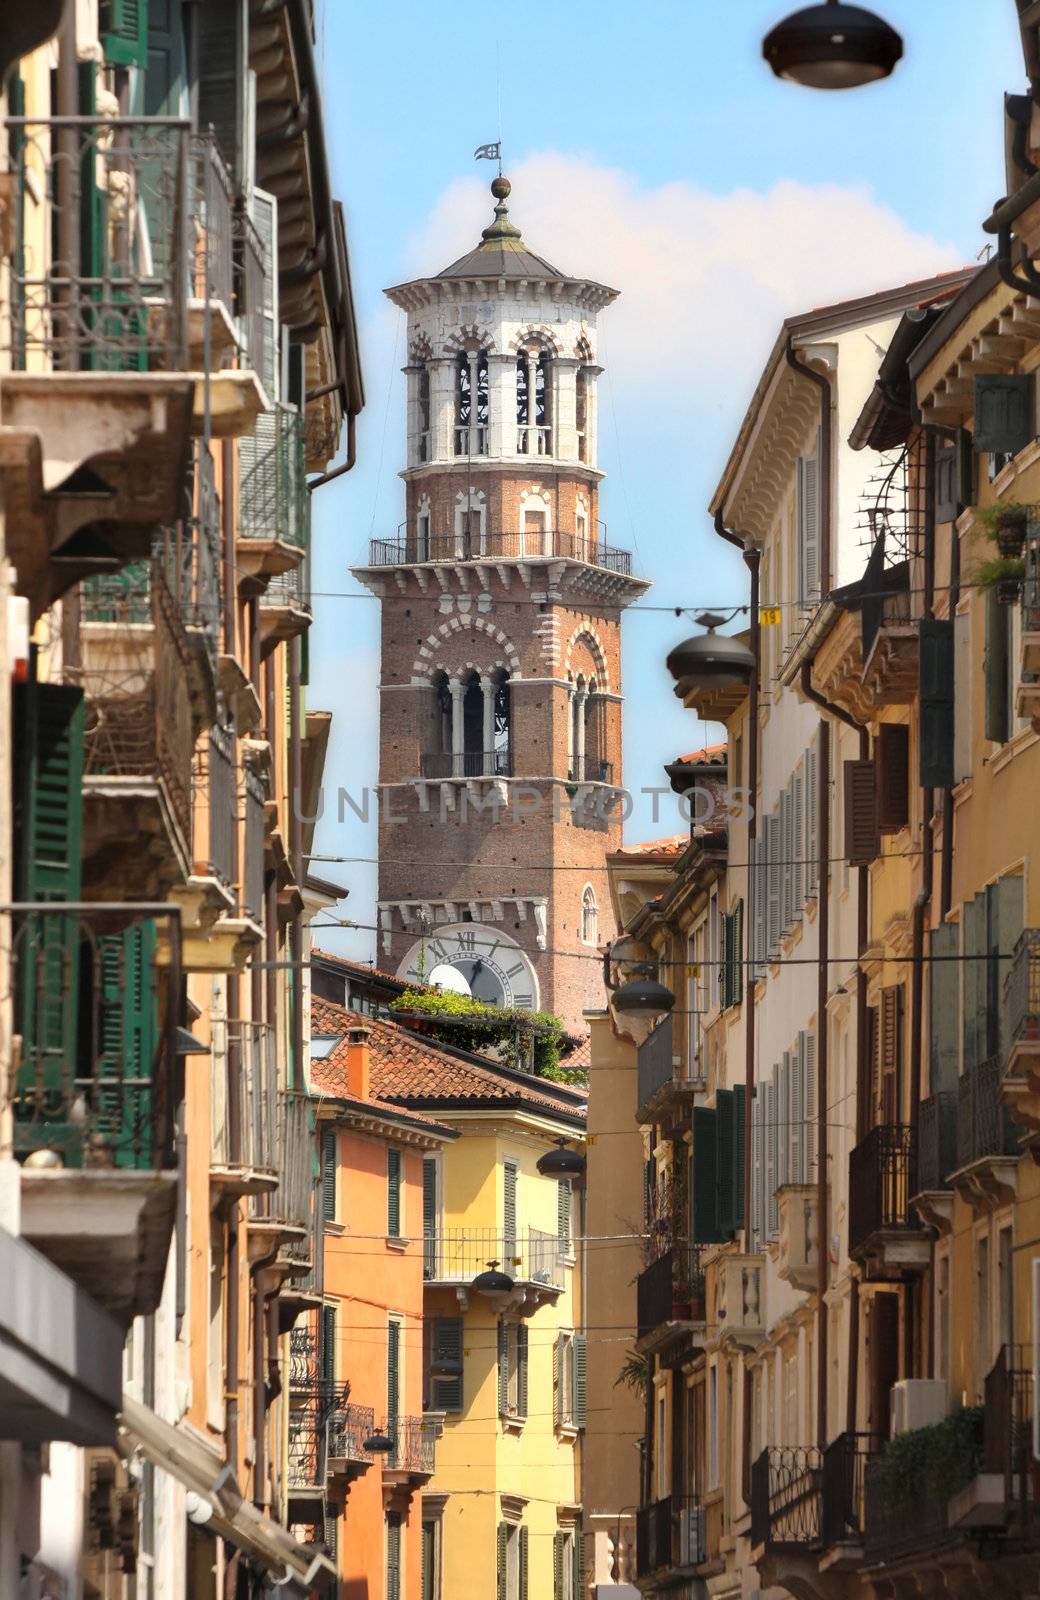 details Tower Lamberti in city Verona, Italy